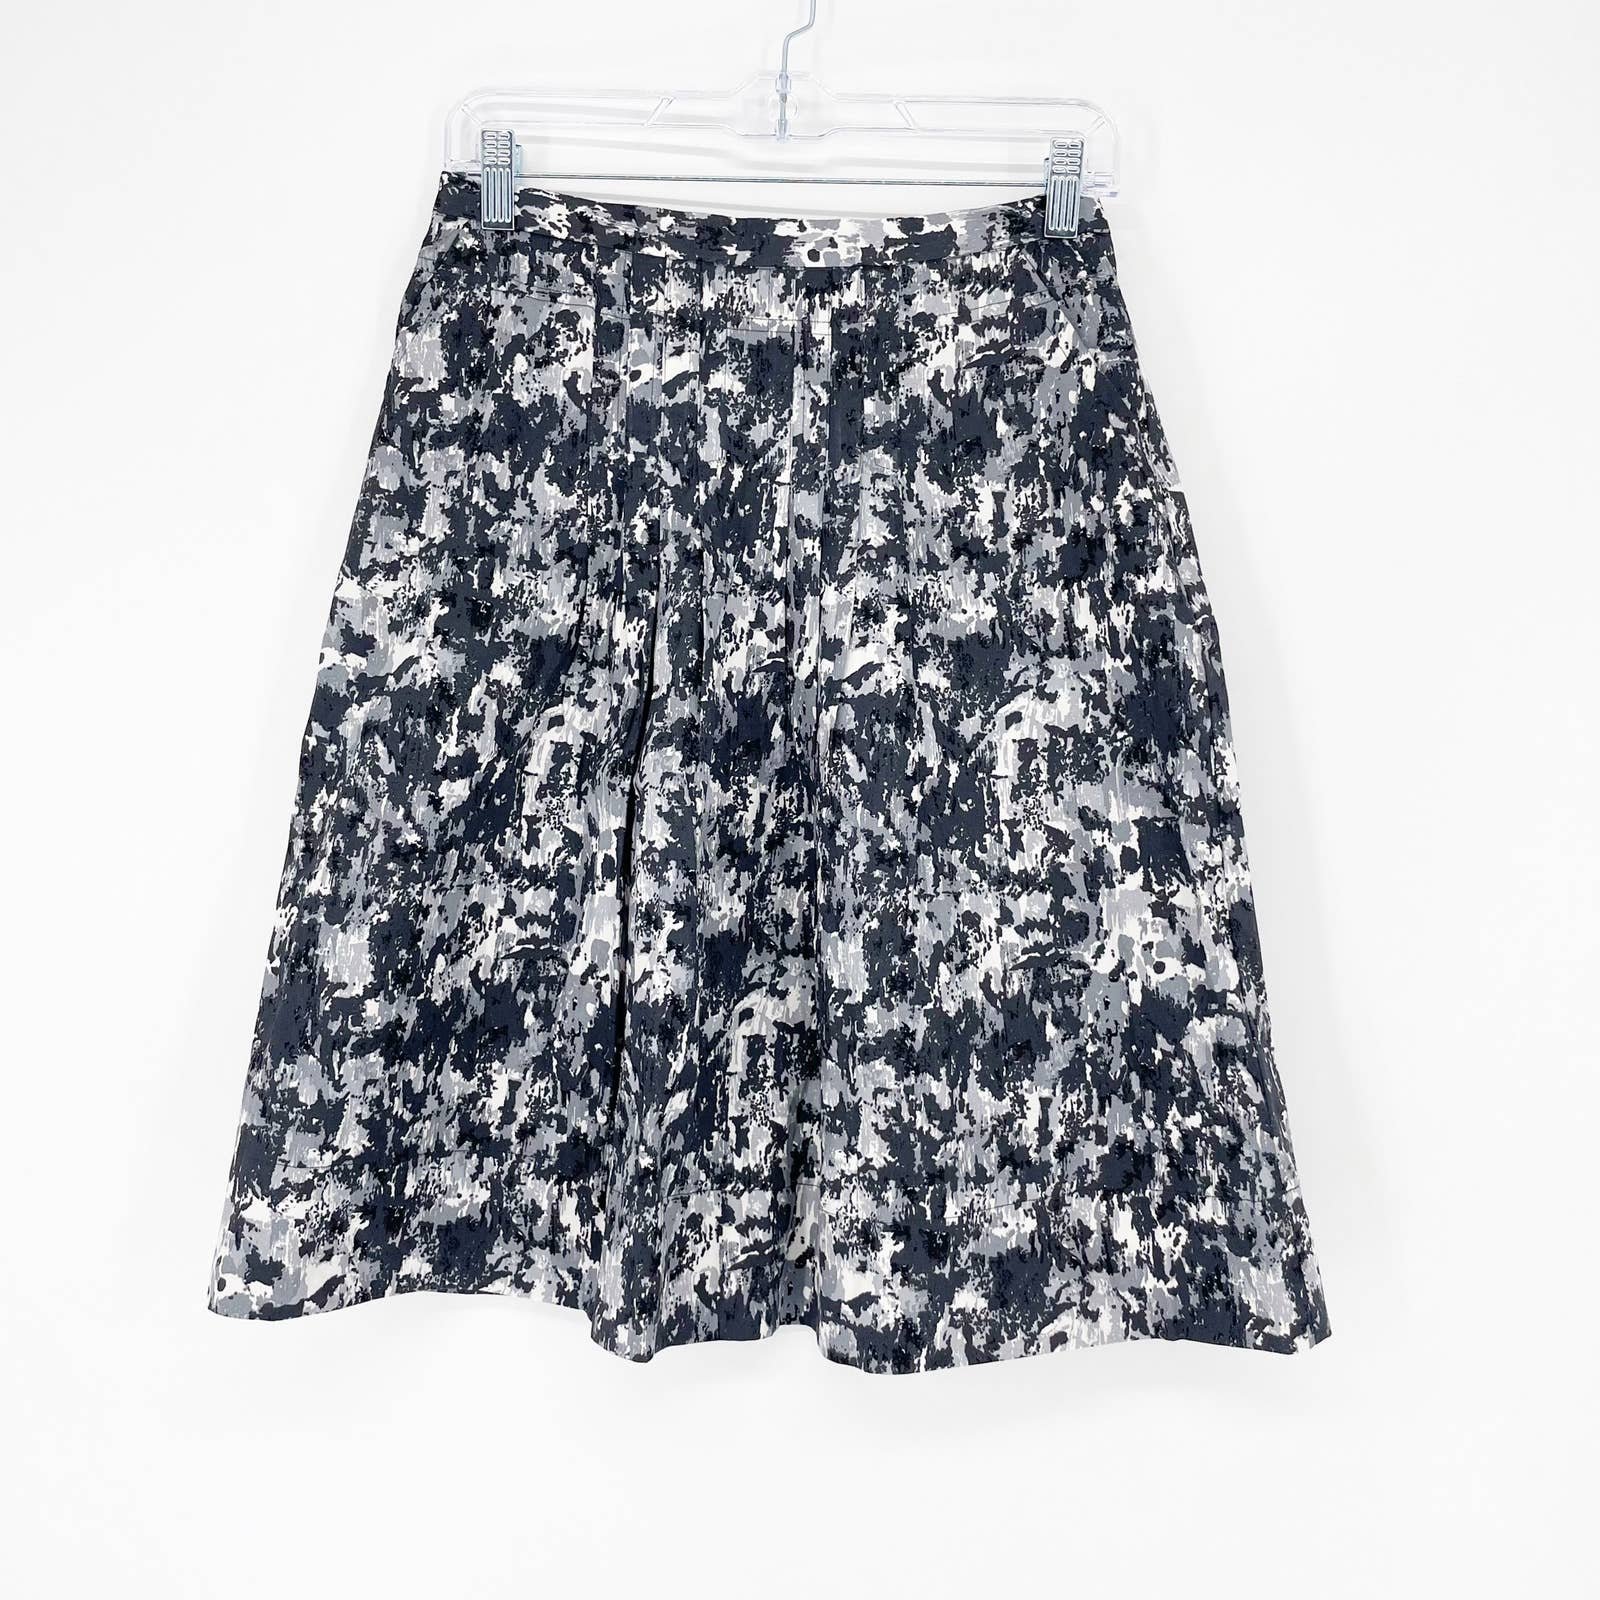 Popular New York & Company 100% Cotton A-Line Skirt Siz